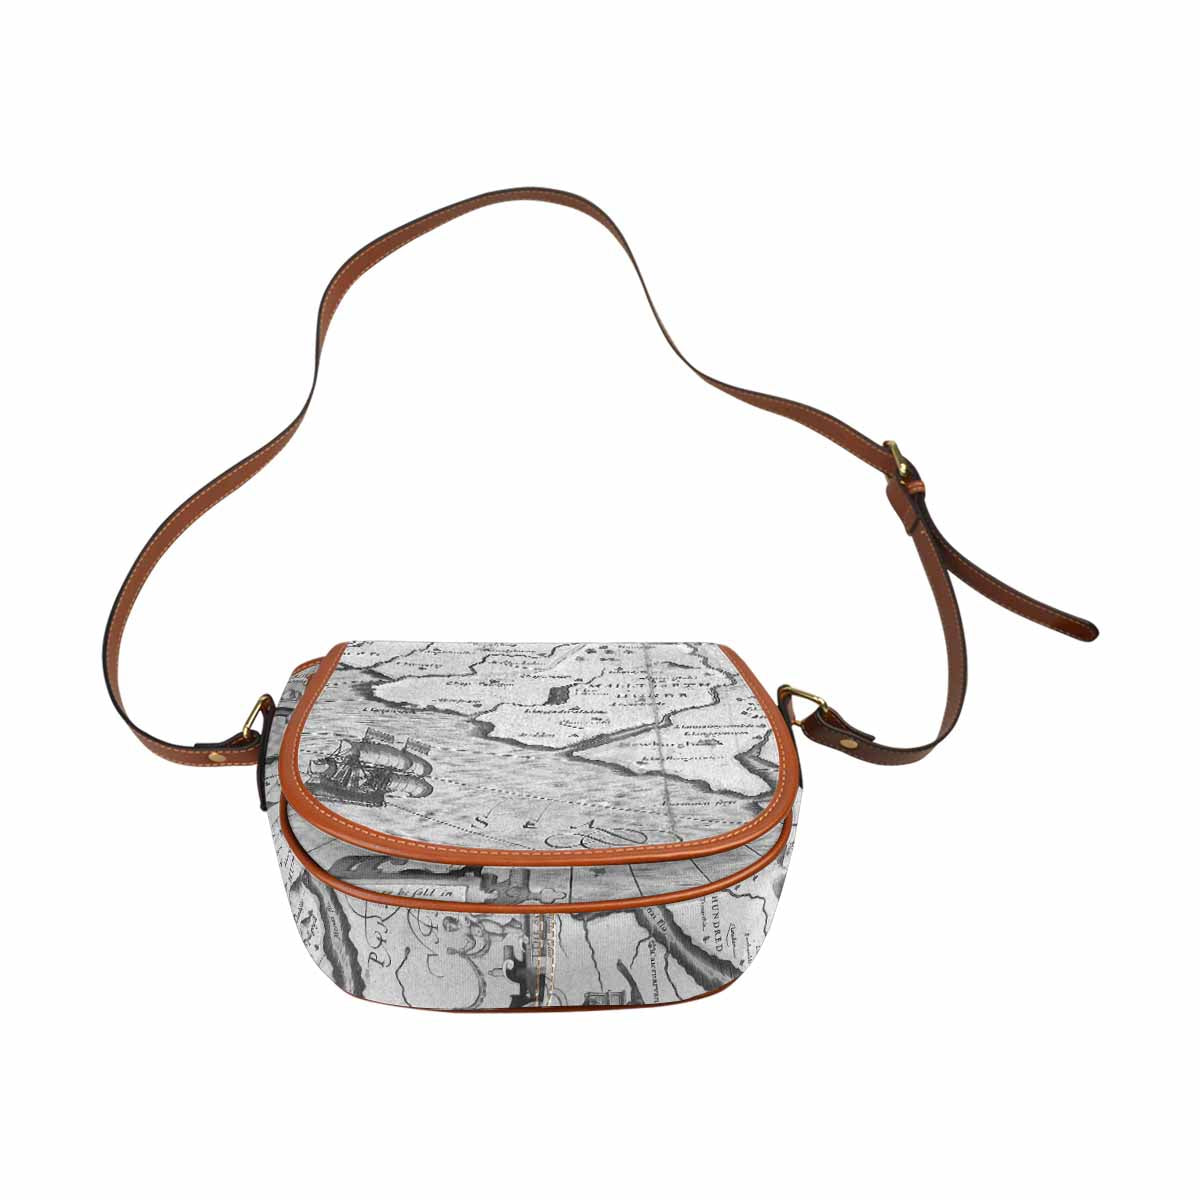 Antique Map design Handbag, saddle bag, Design 11